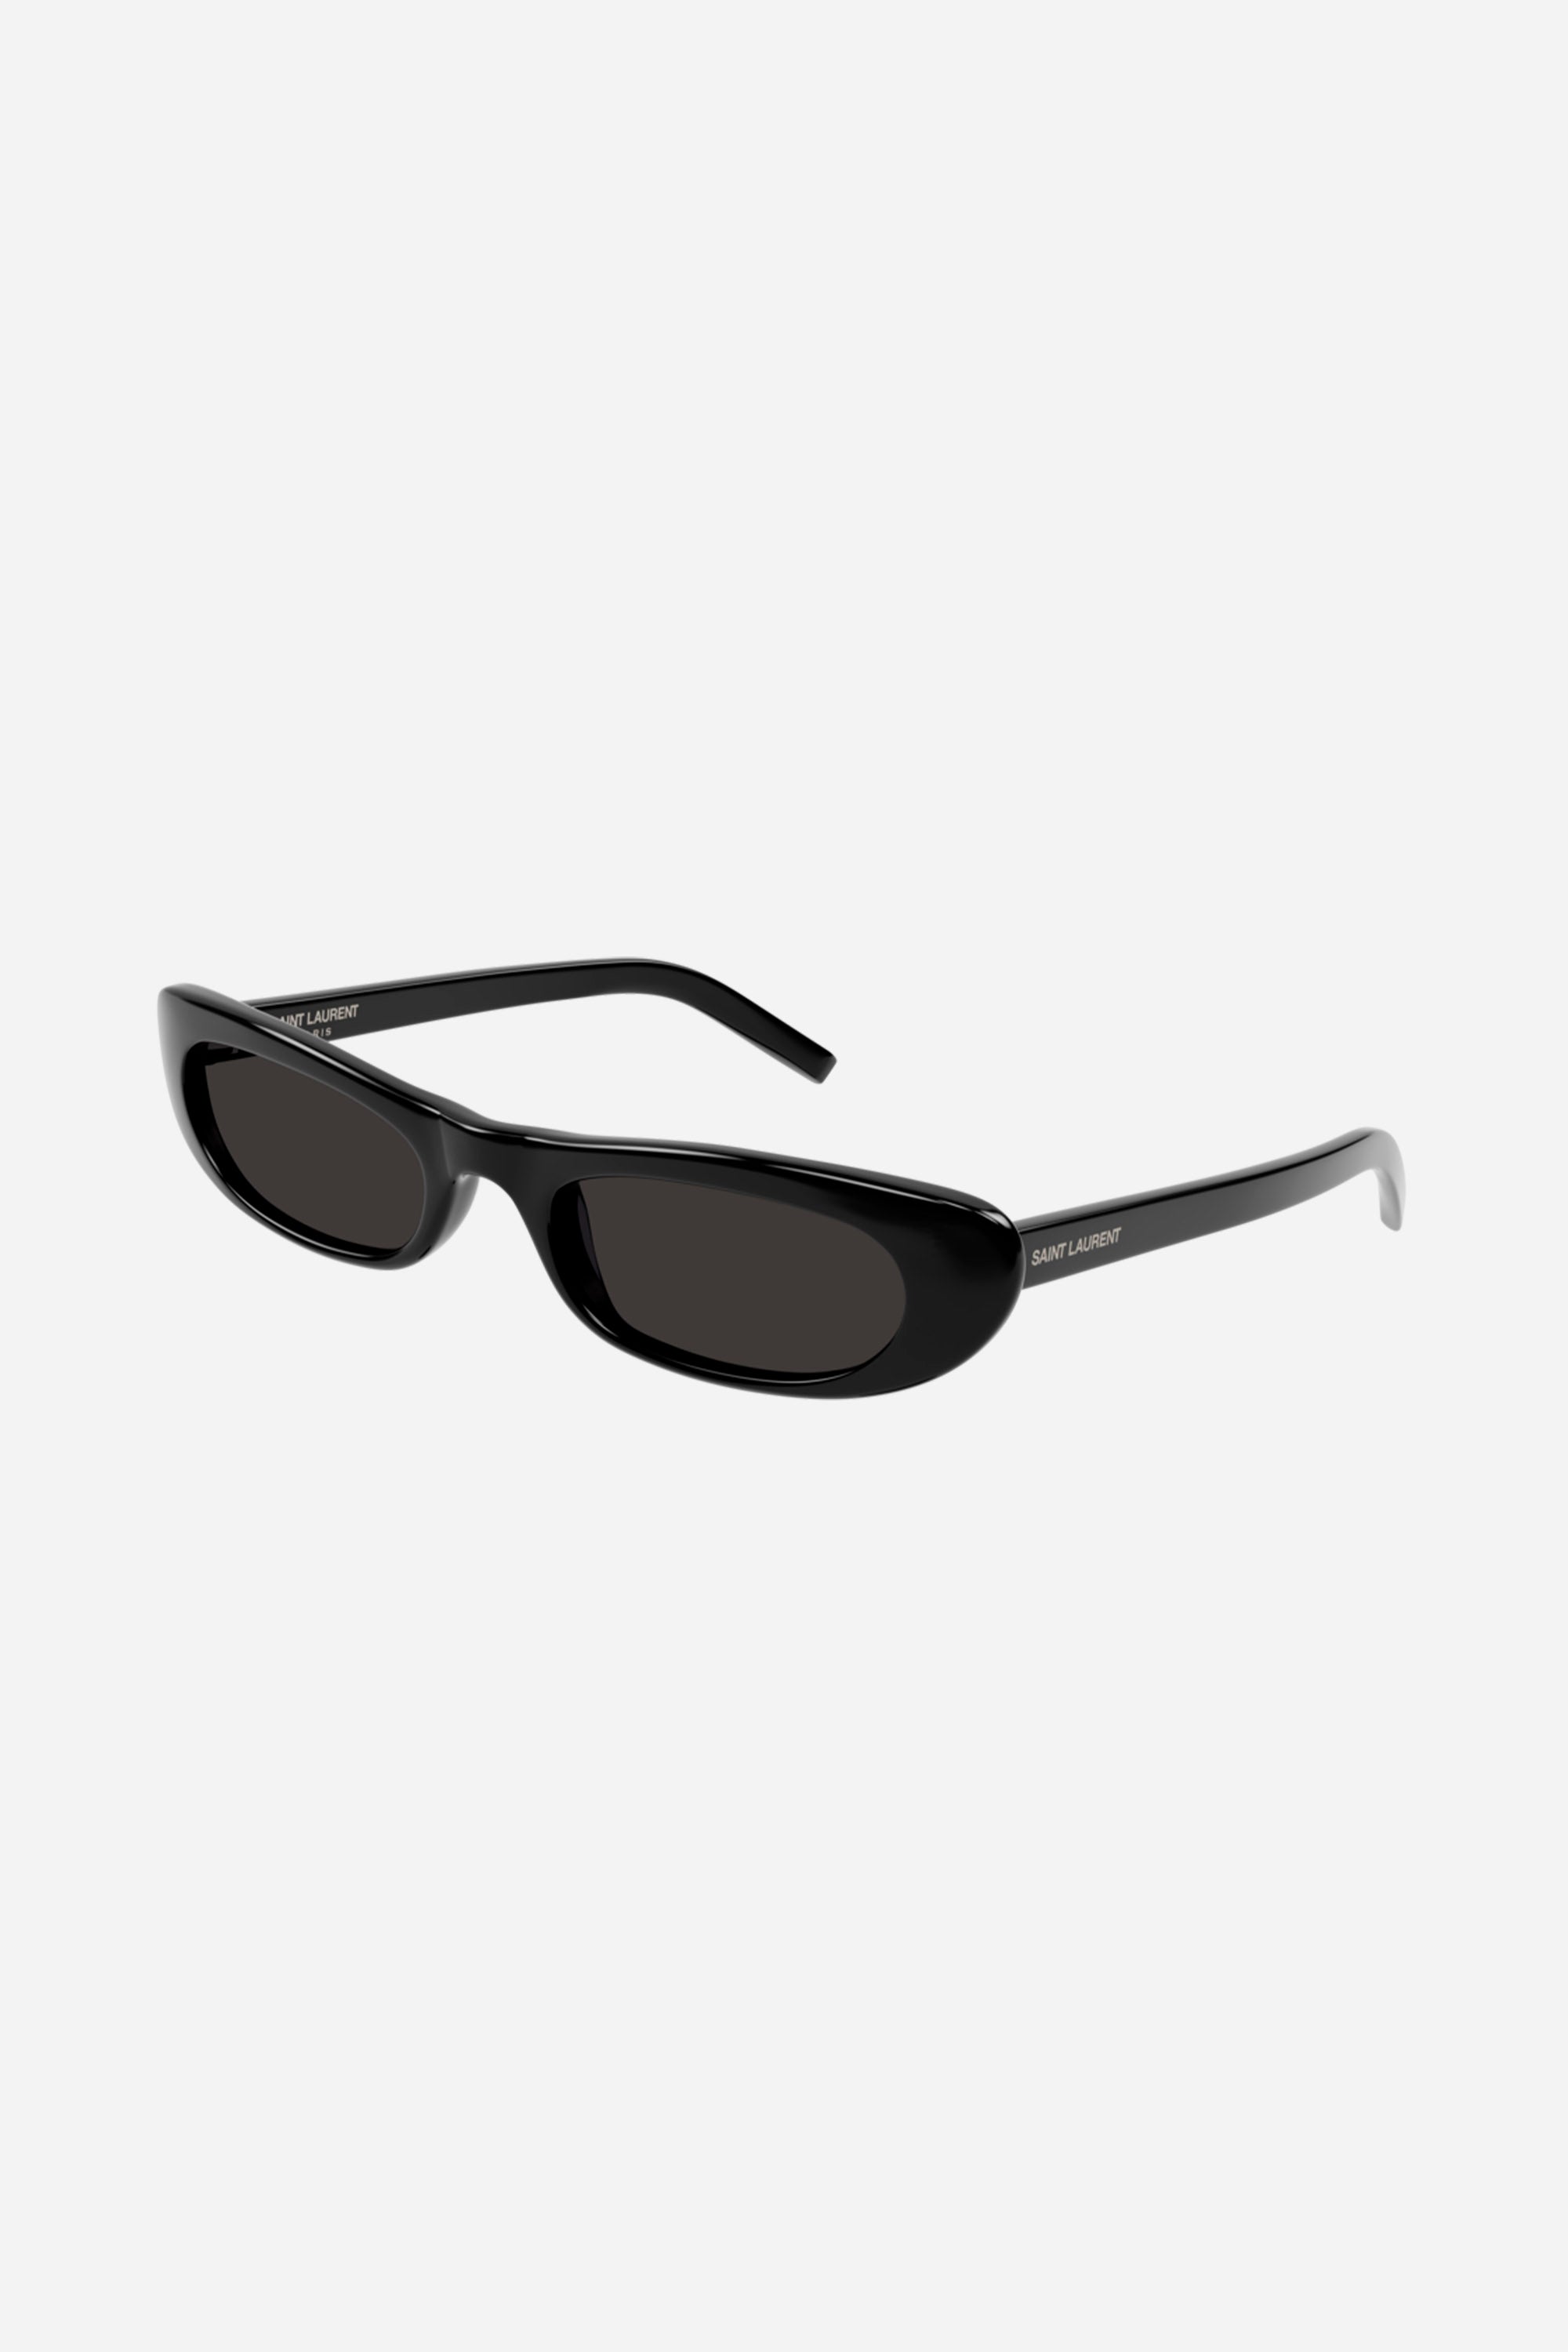 Saint Laurent SL 577 SHADE black sunglasses - Eyewear Club